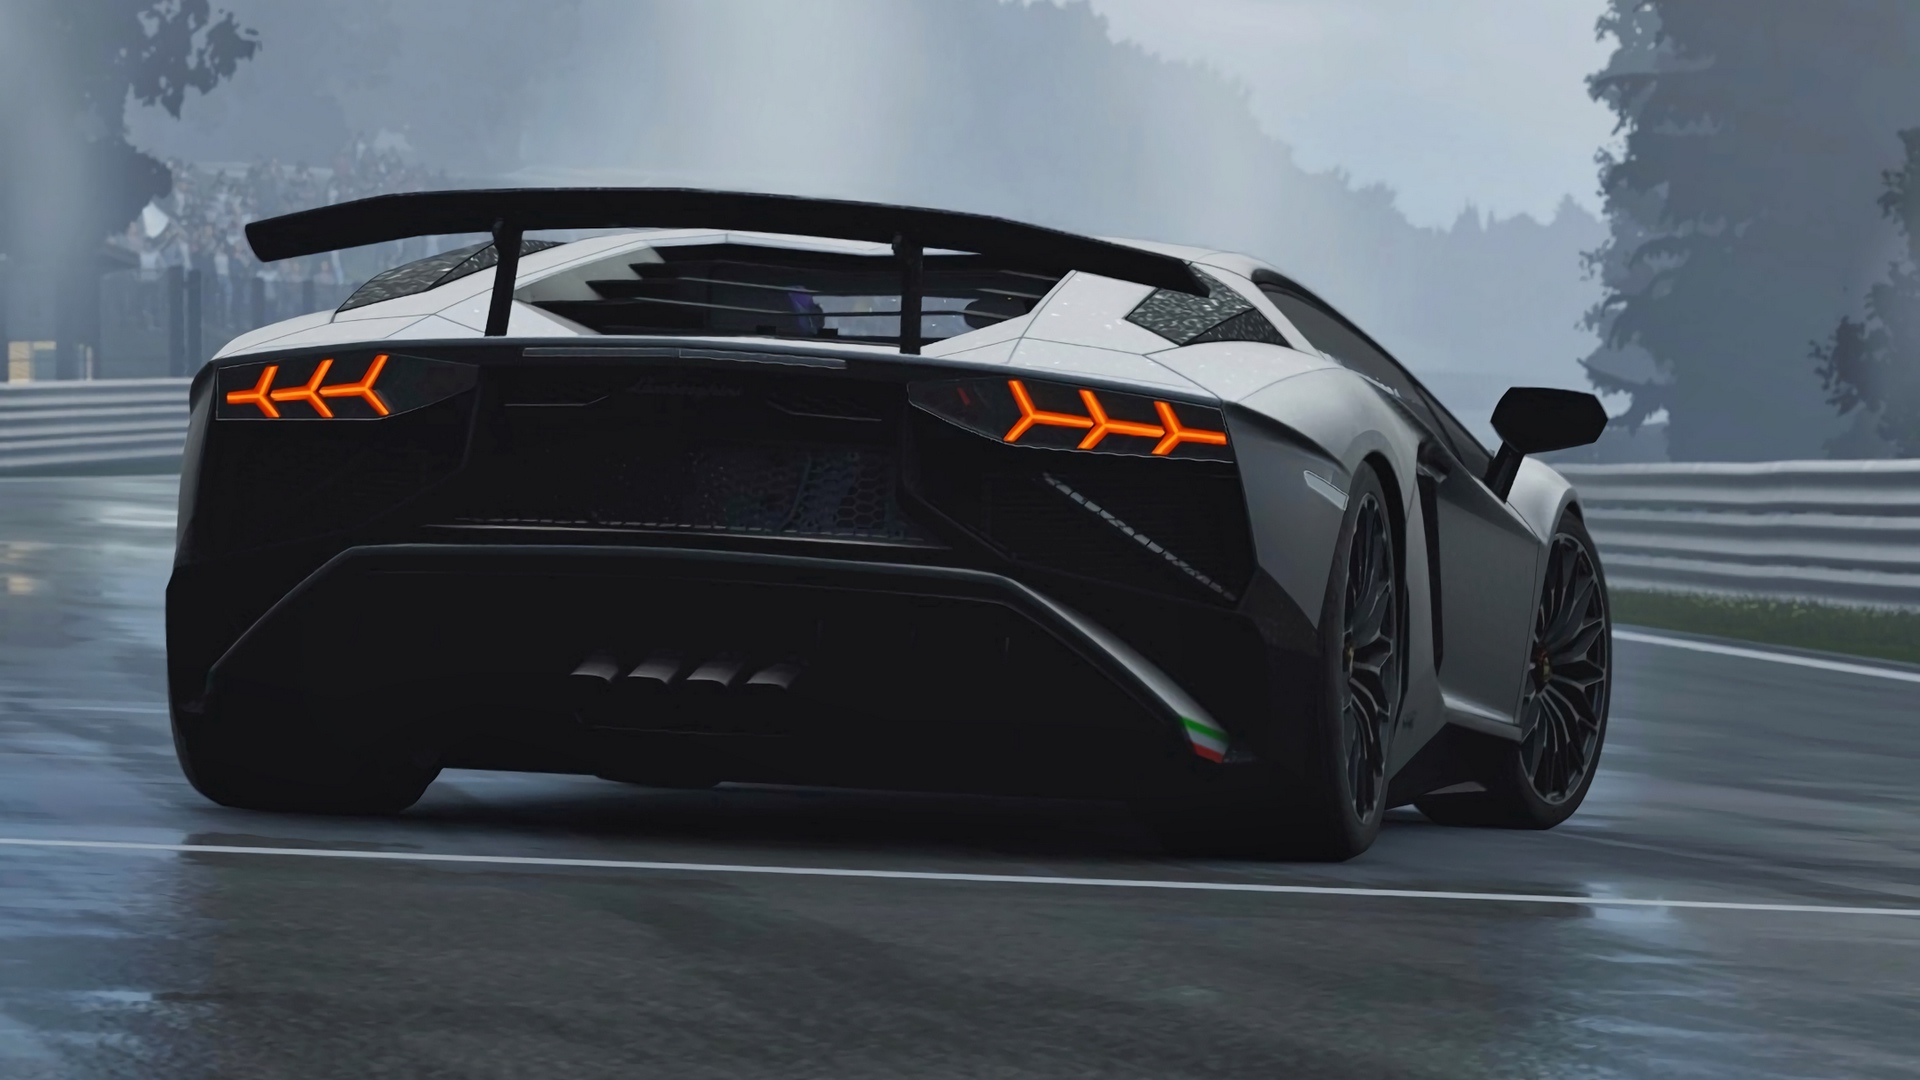 Lamborghini Sports Car Car Supercars Black Cars Vehicle Forza Horizon Video Games Exhaust Pipes 1920x1080